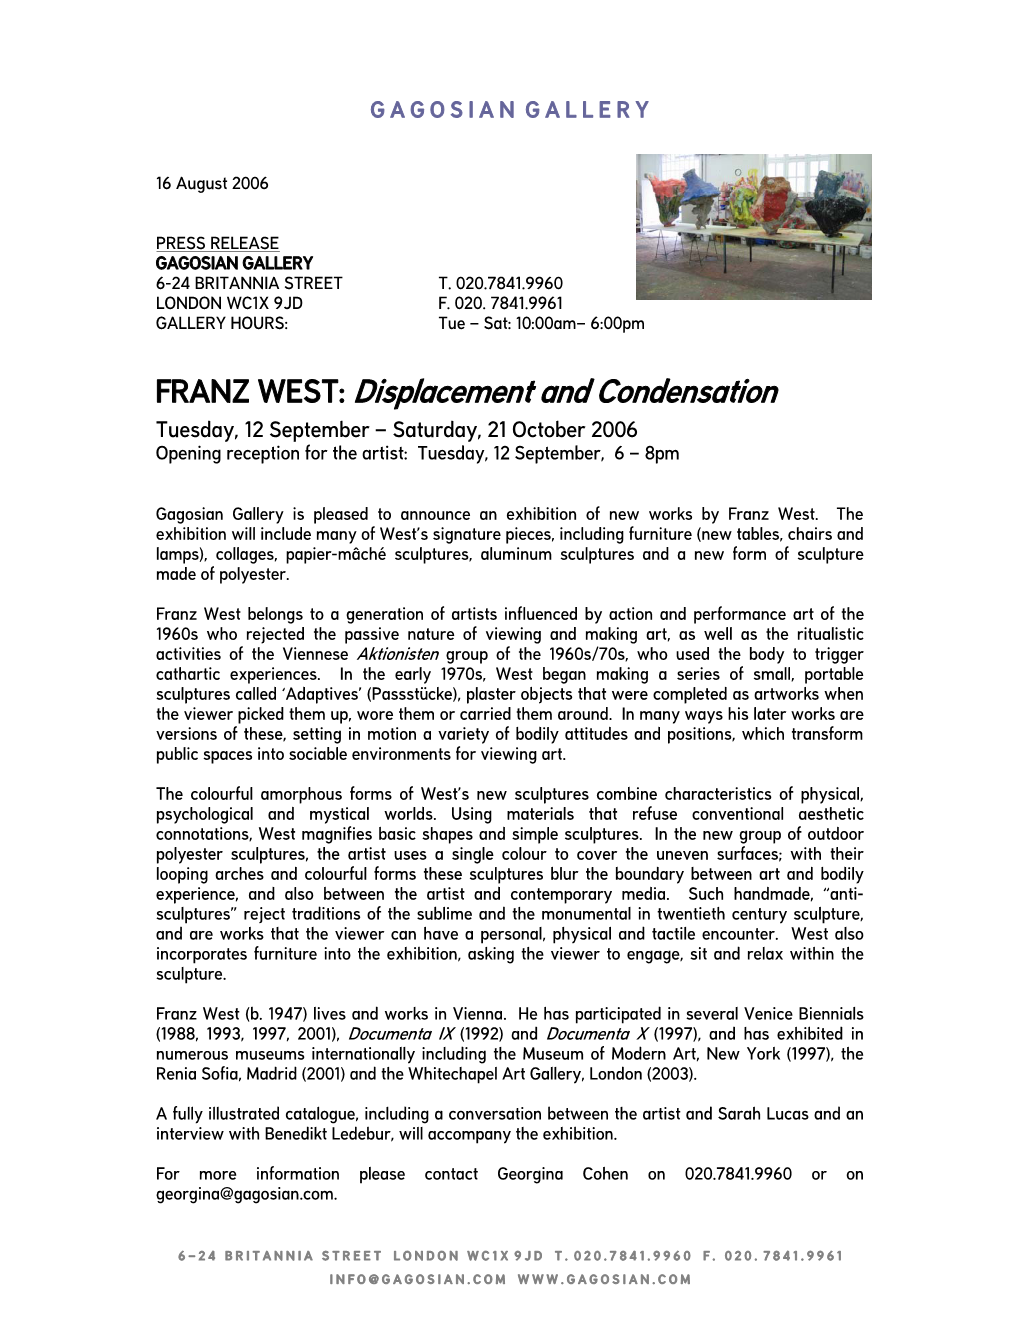 FRANZ WEST: Displacement and Condensation